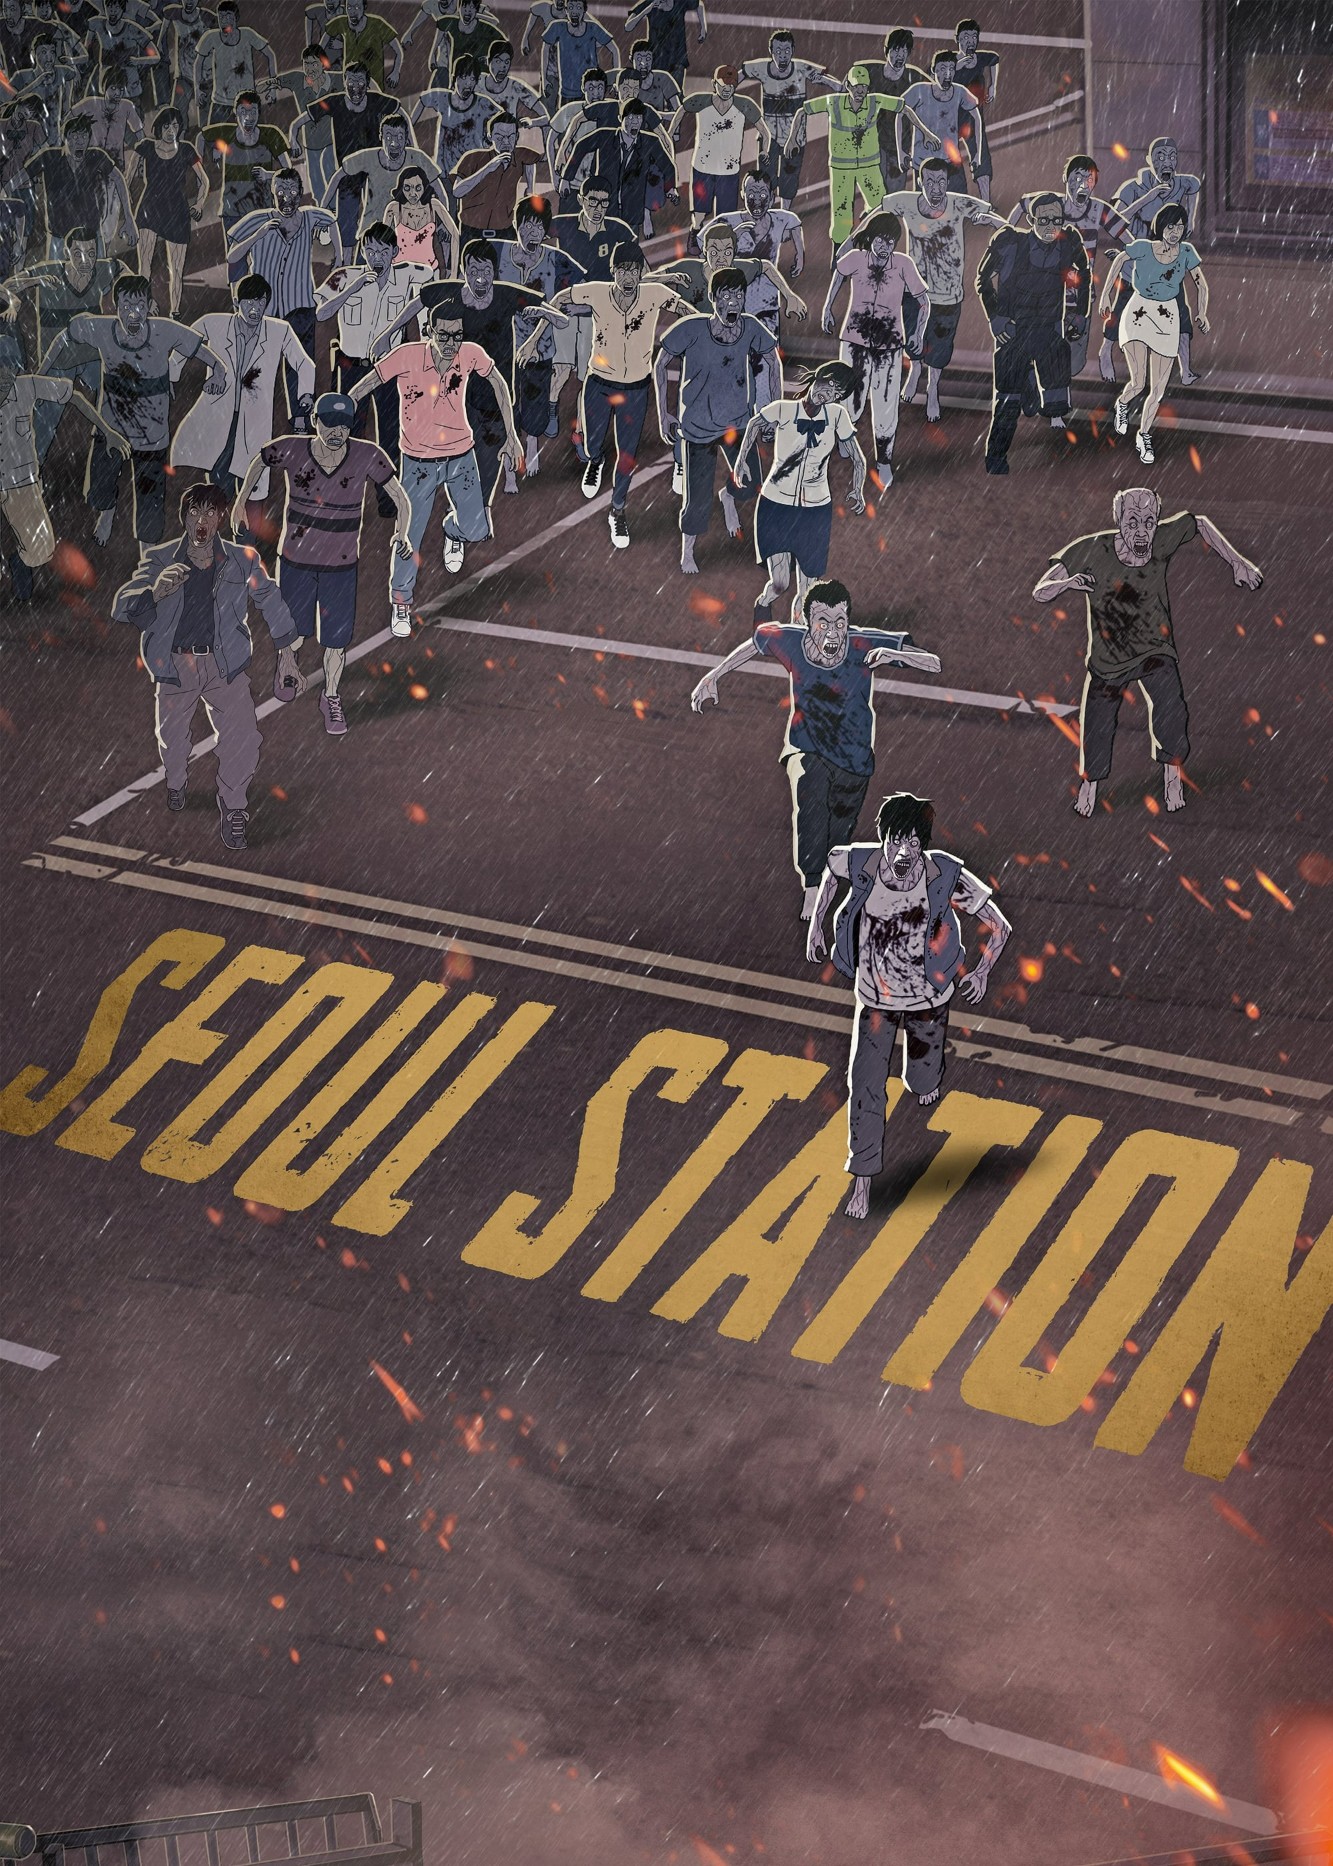 Seoul Station - Seoul Station (2016)